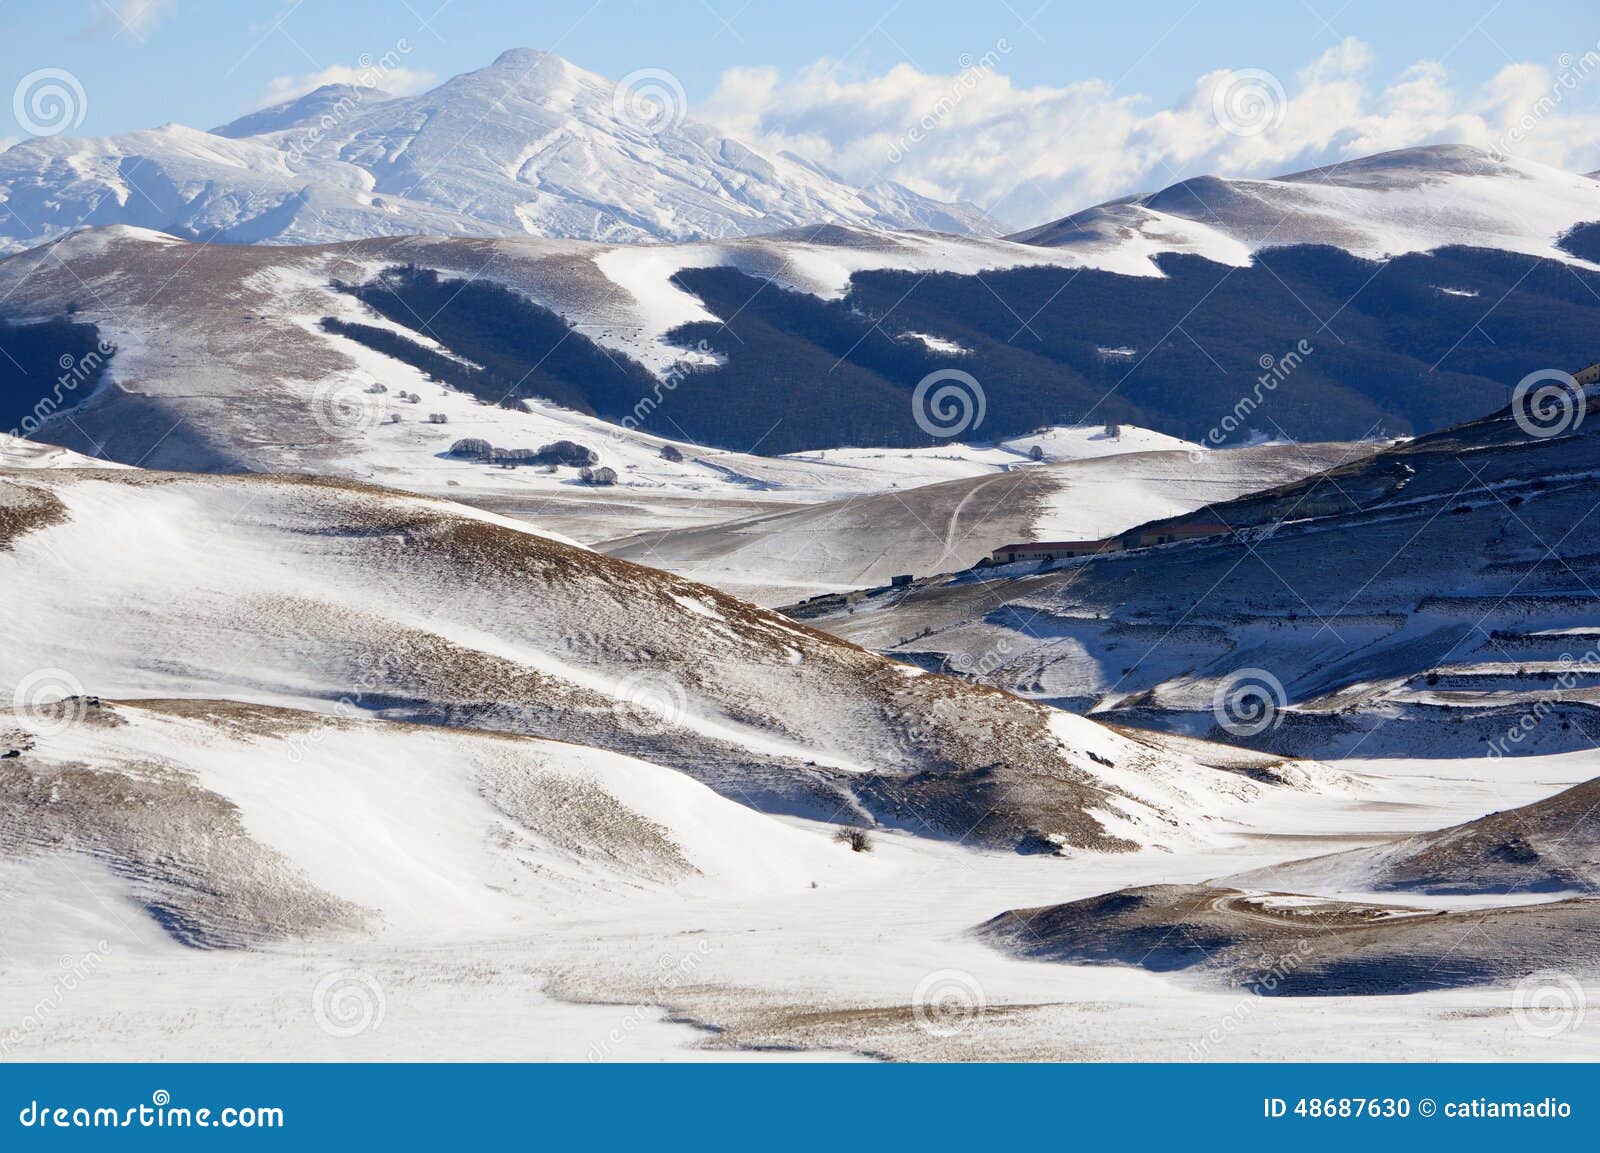 apennines landscape with snow